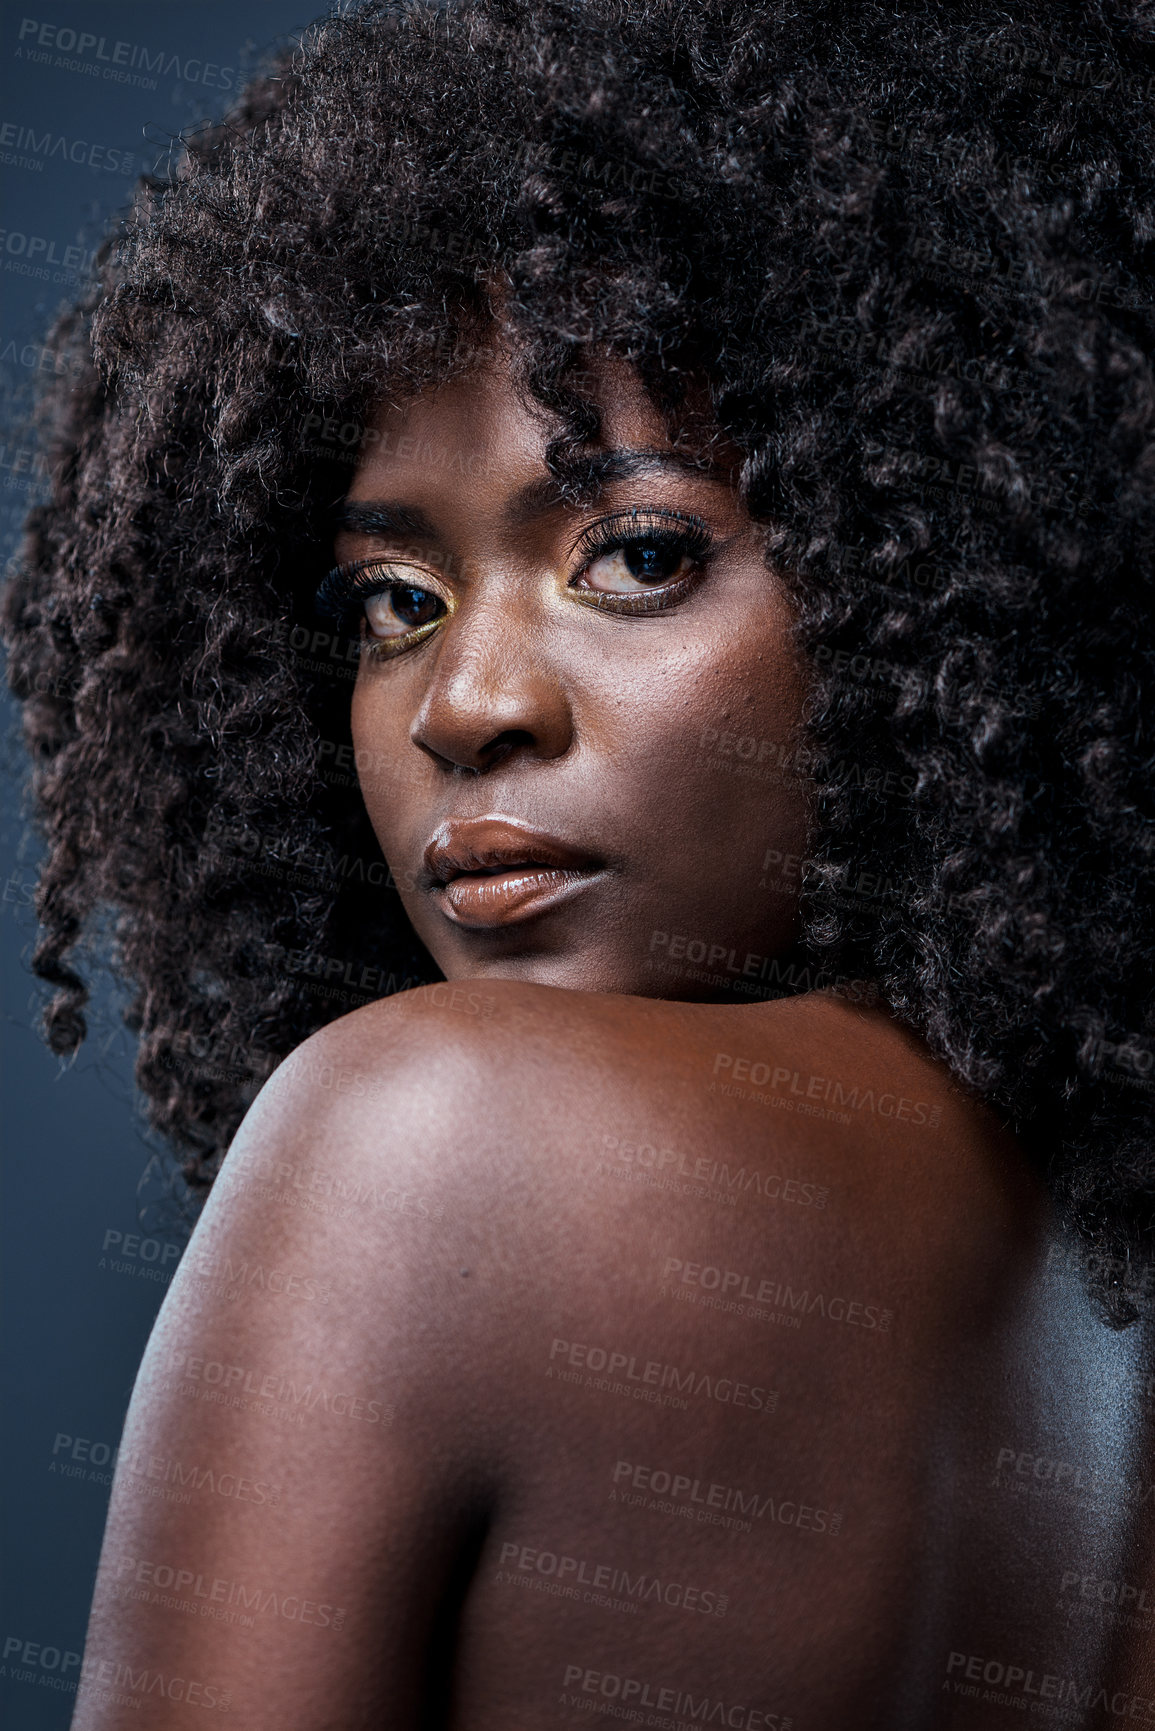 Buy stock photo Studio shot of a beautiful young woman with glowing skin